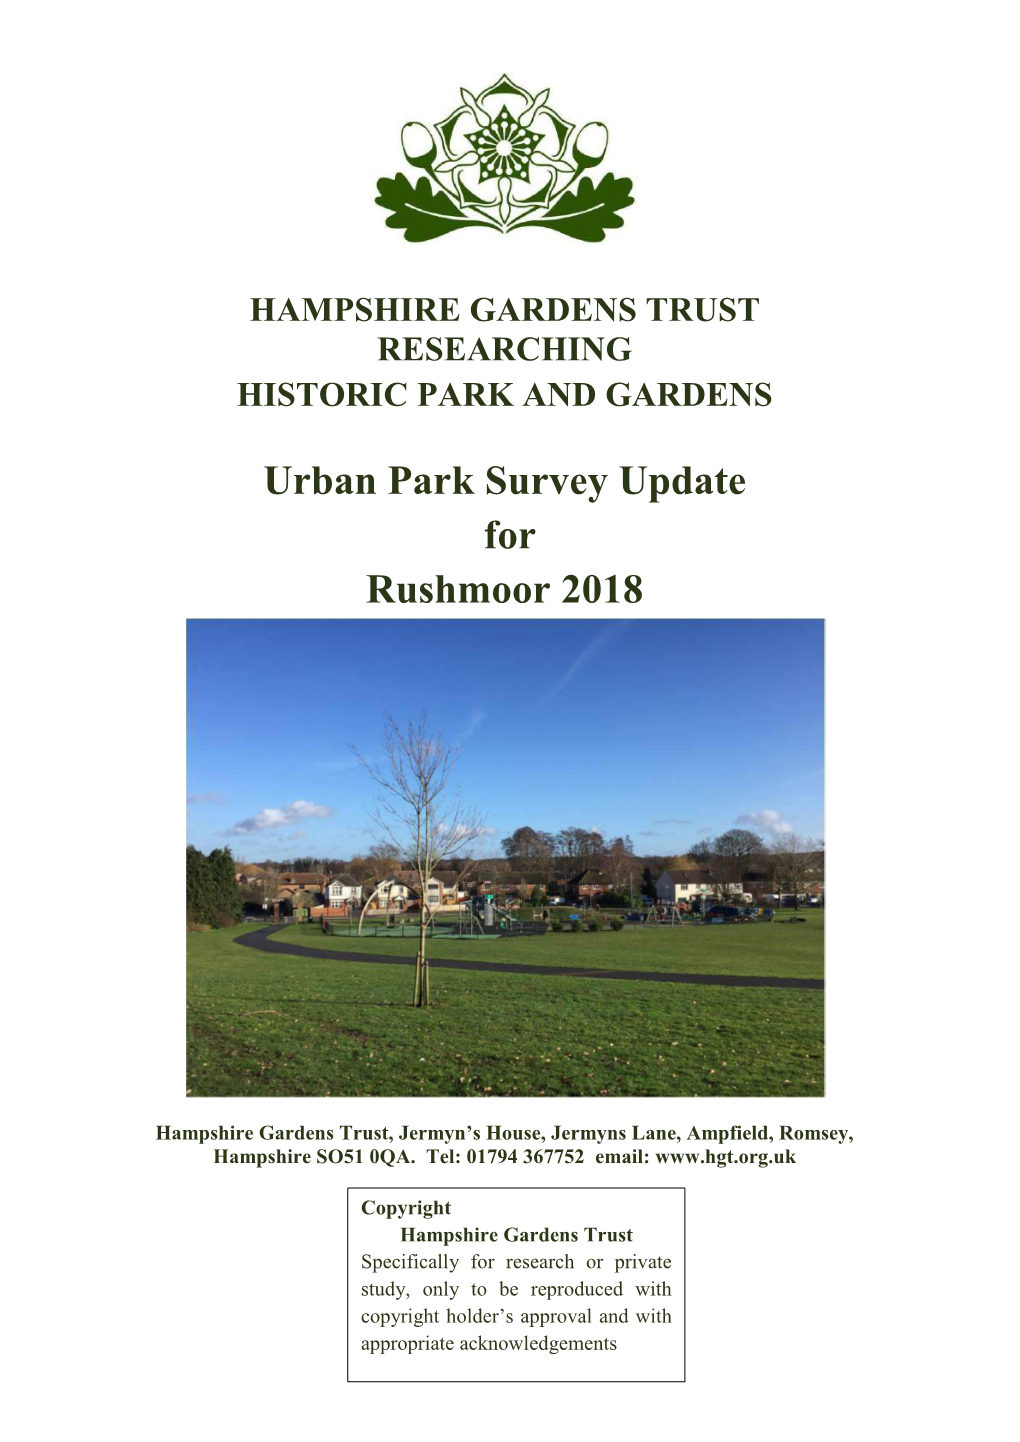 Urban Park Survey Update for Rushmoor 2018